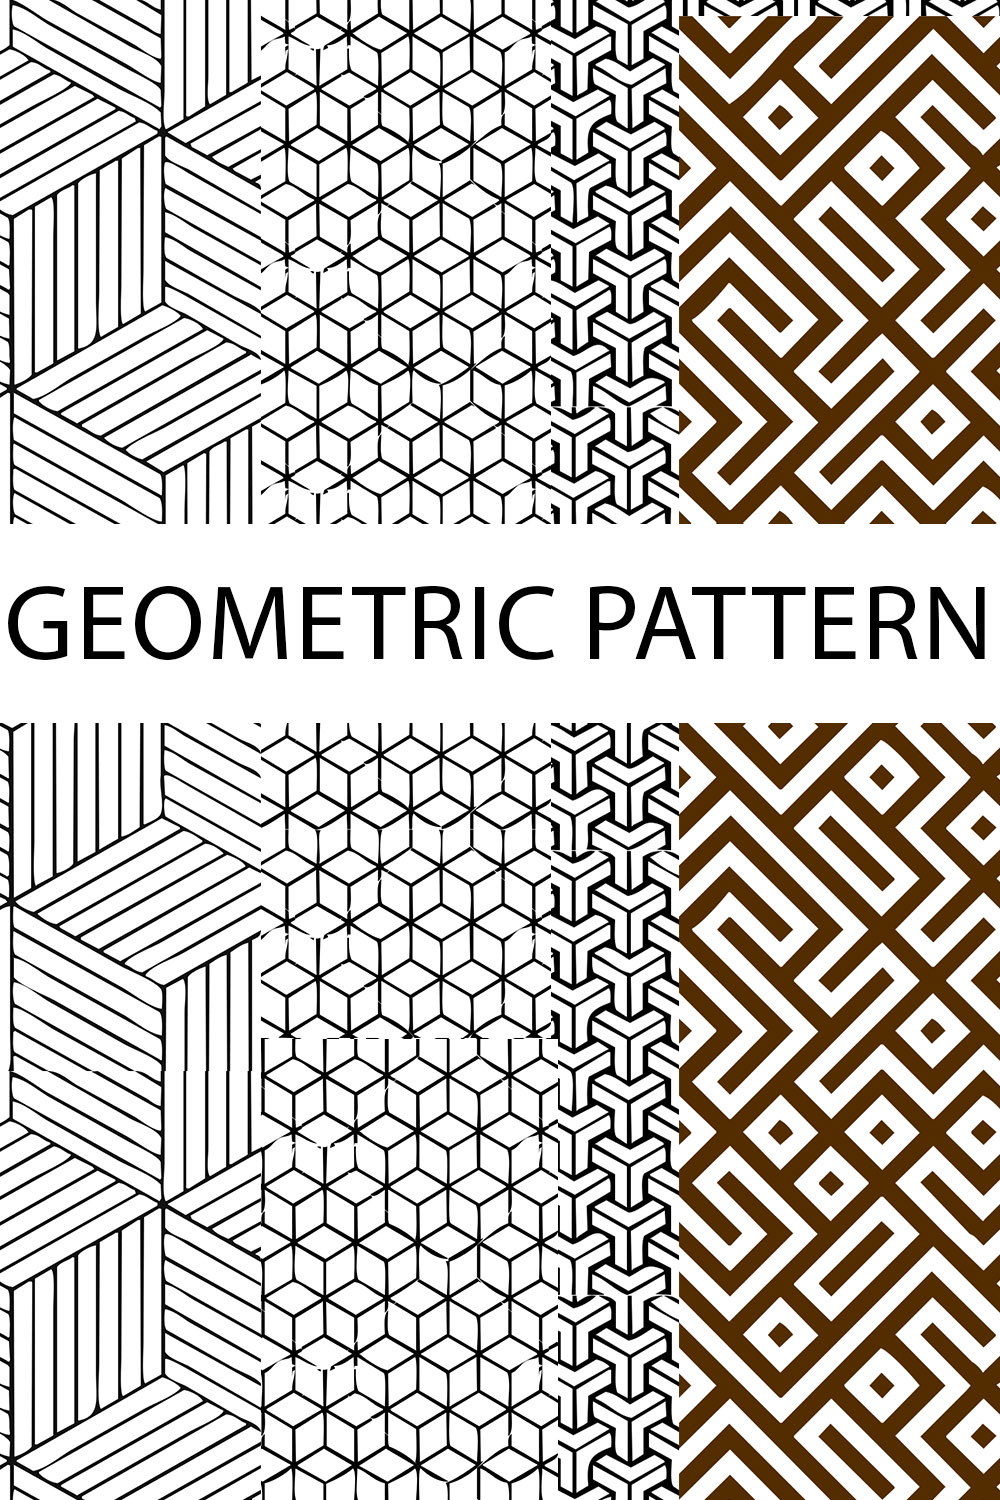 geometric pattern pinterest preview image.